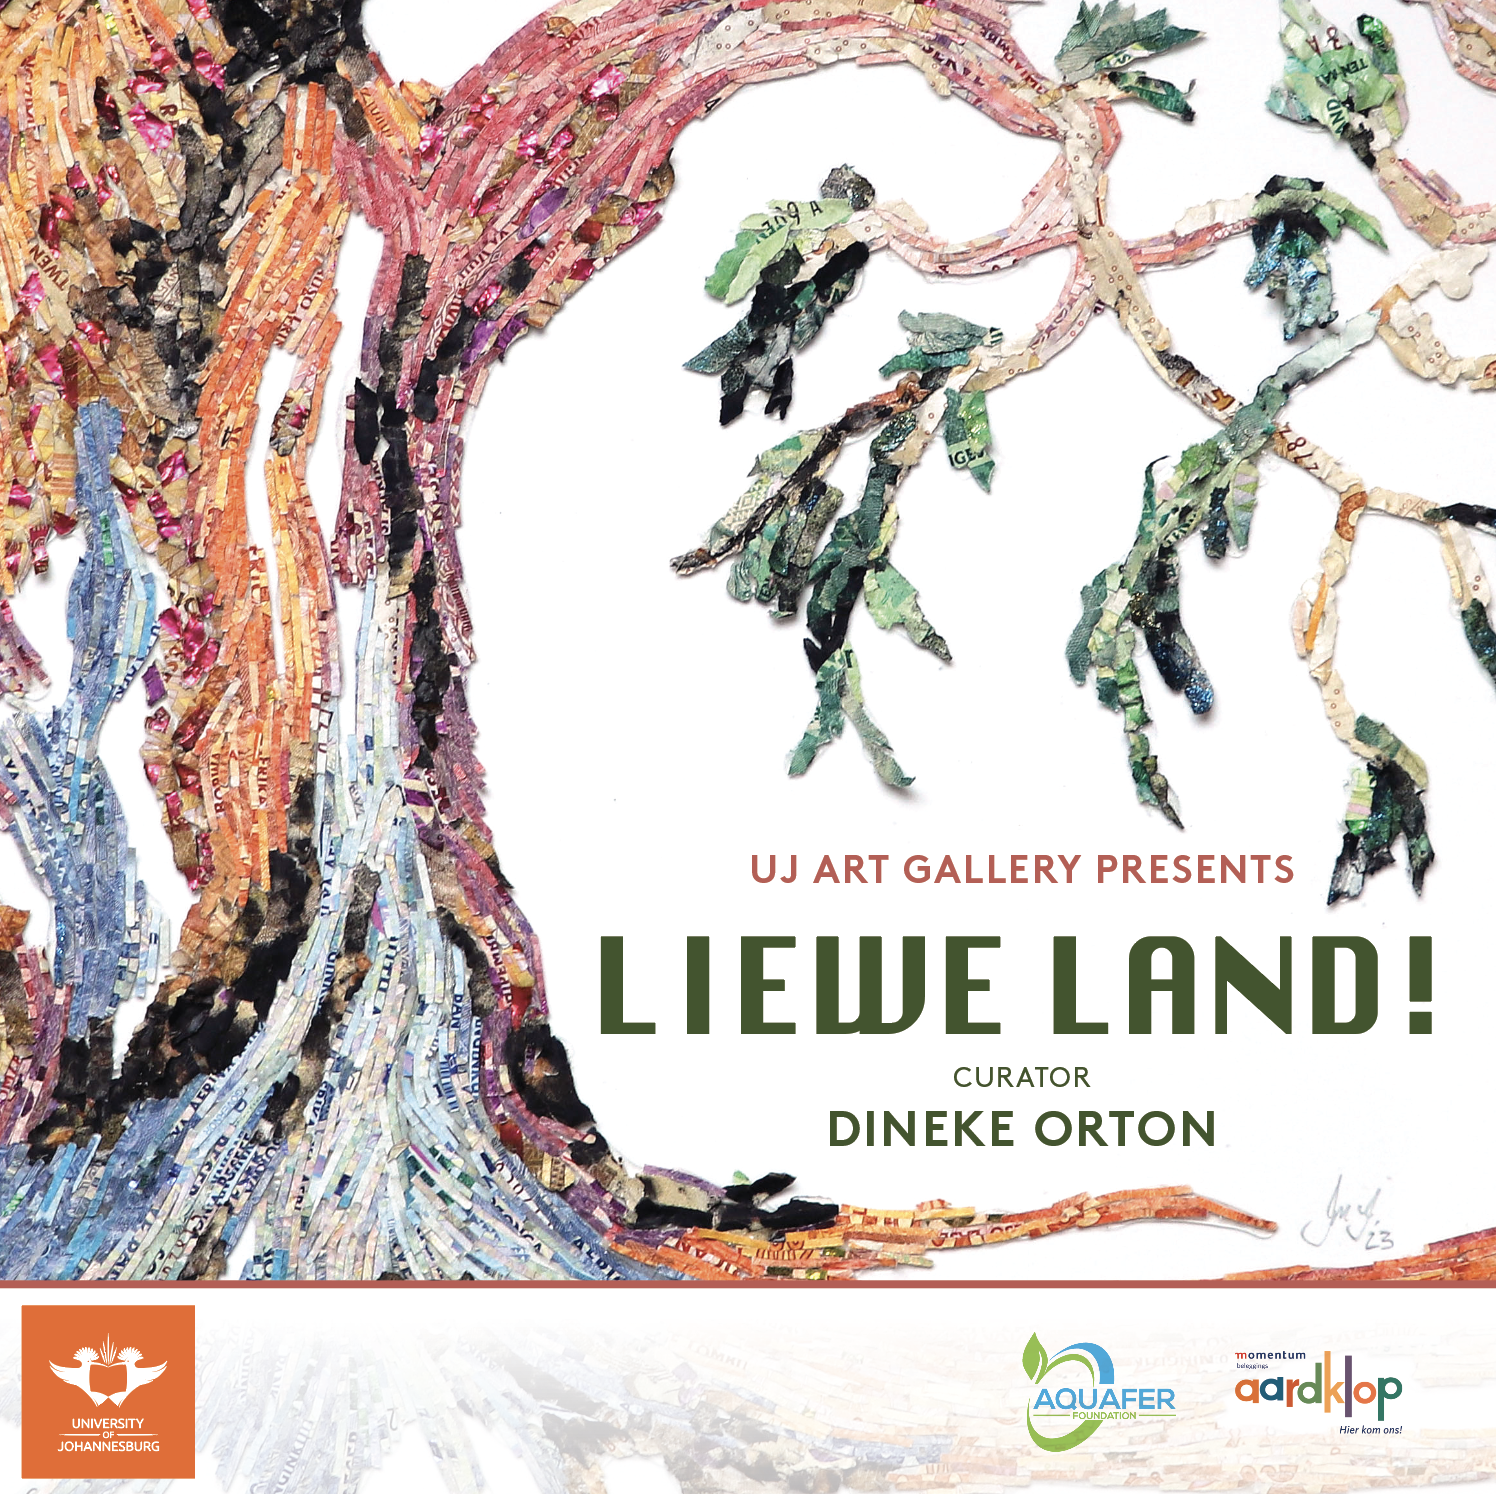 Over 30 artists reinterpret classic South African landscape artworks in 'Liewe Land! III'.